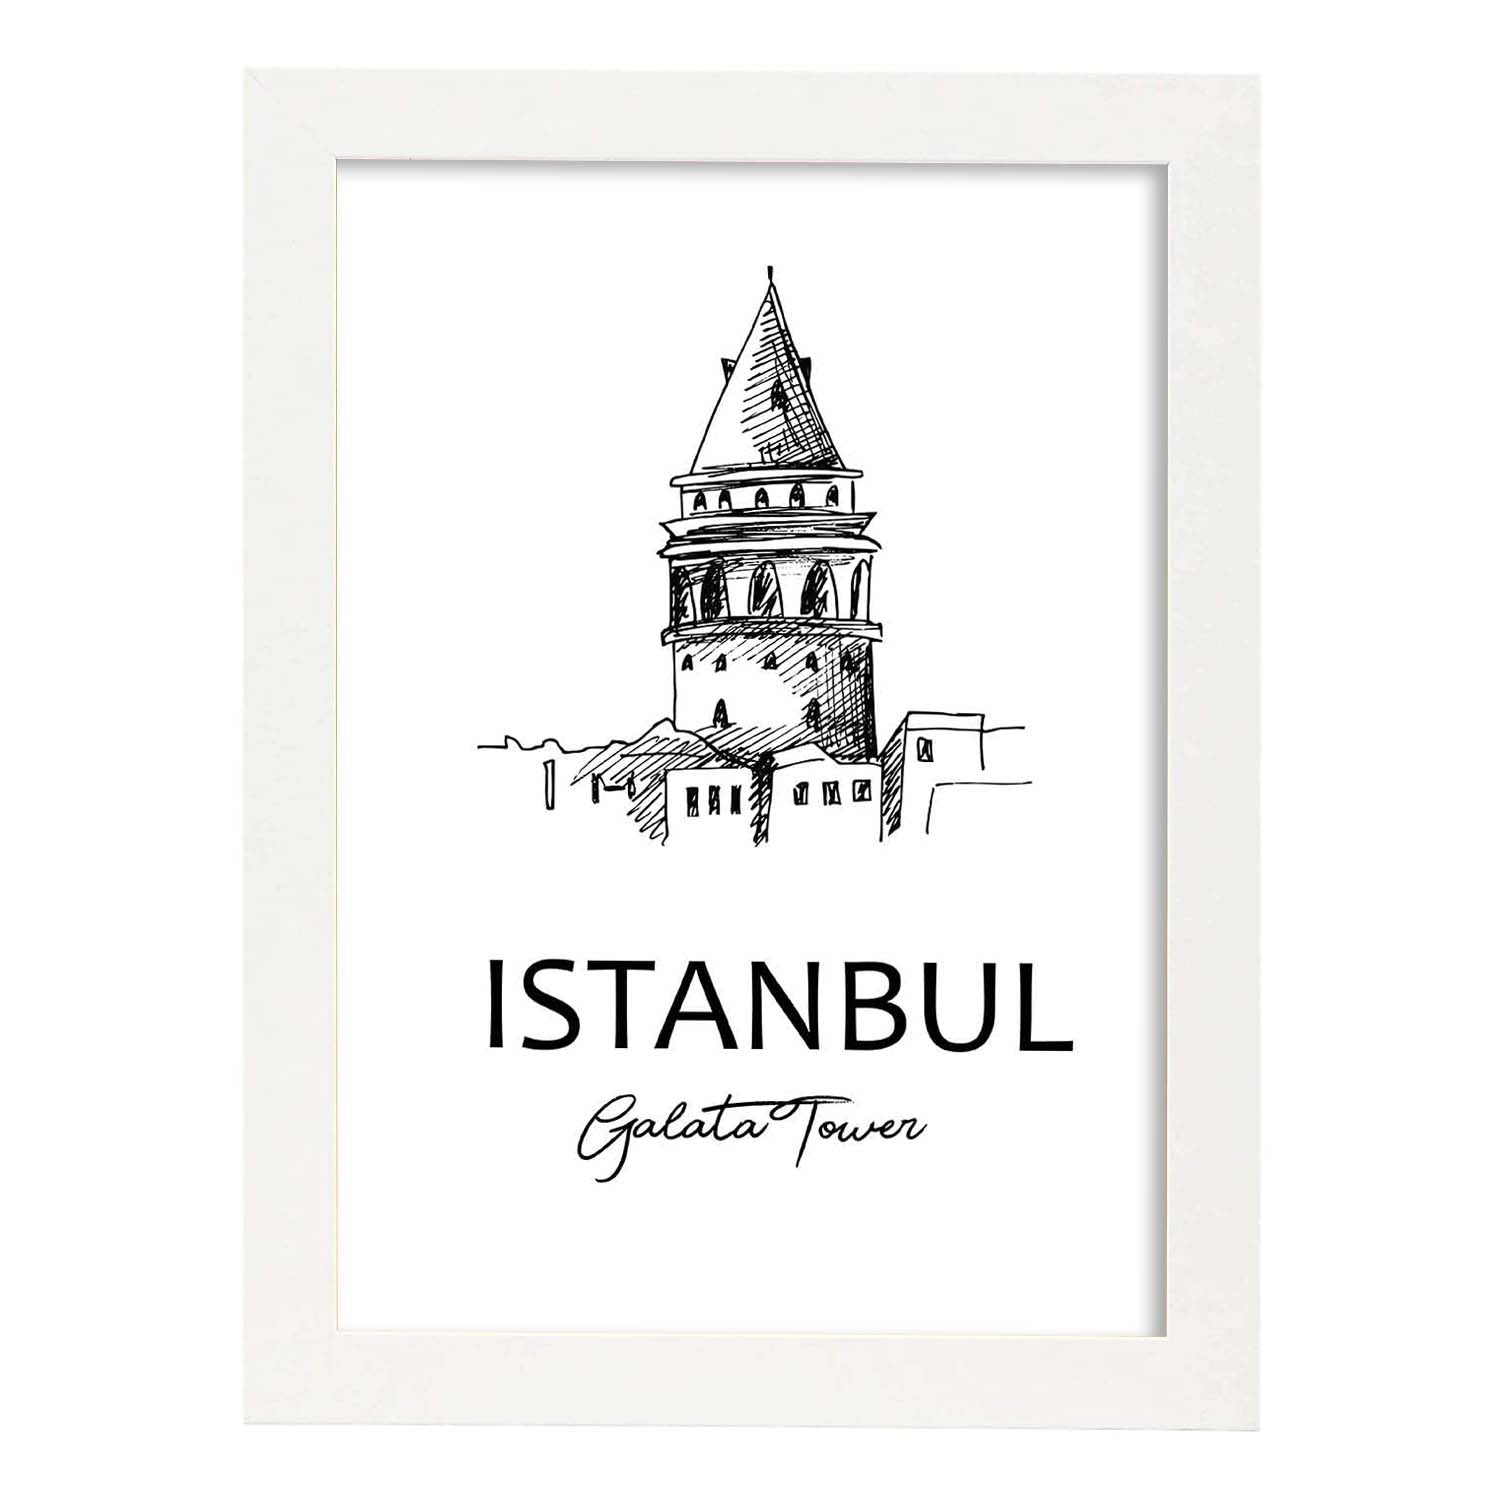 Poster de Estambul - Torre galata. Láminas con monumentos de ciudades.-Artwork-Nacnic-A3-Marco Blanco-Nacnic Estudio SL